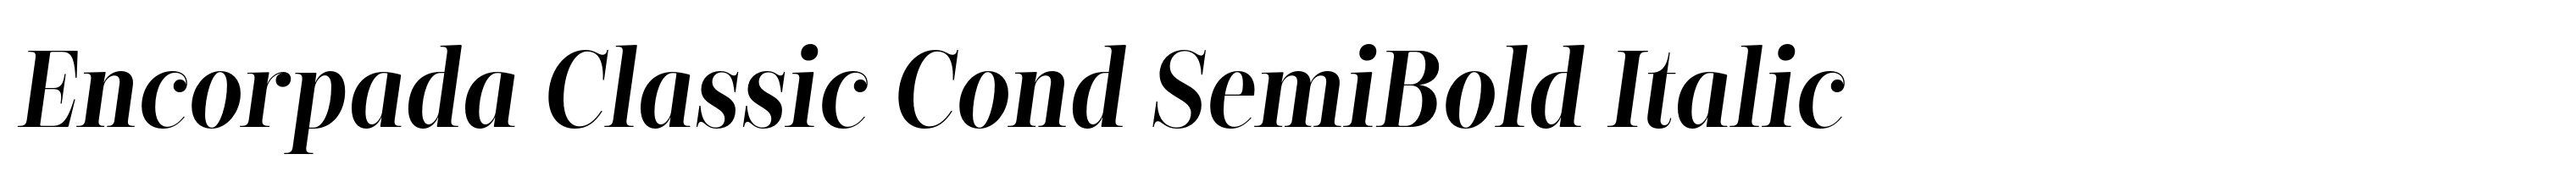 Encorpada Classic Cond SemiBold Italic